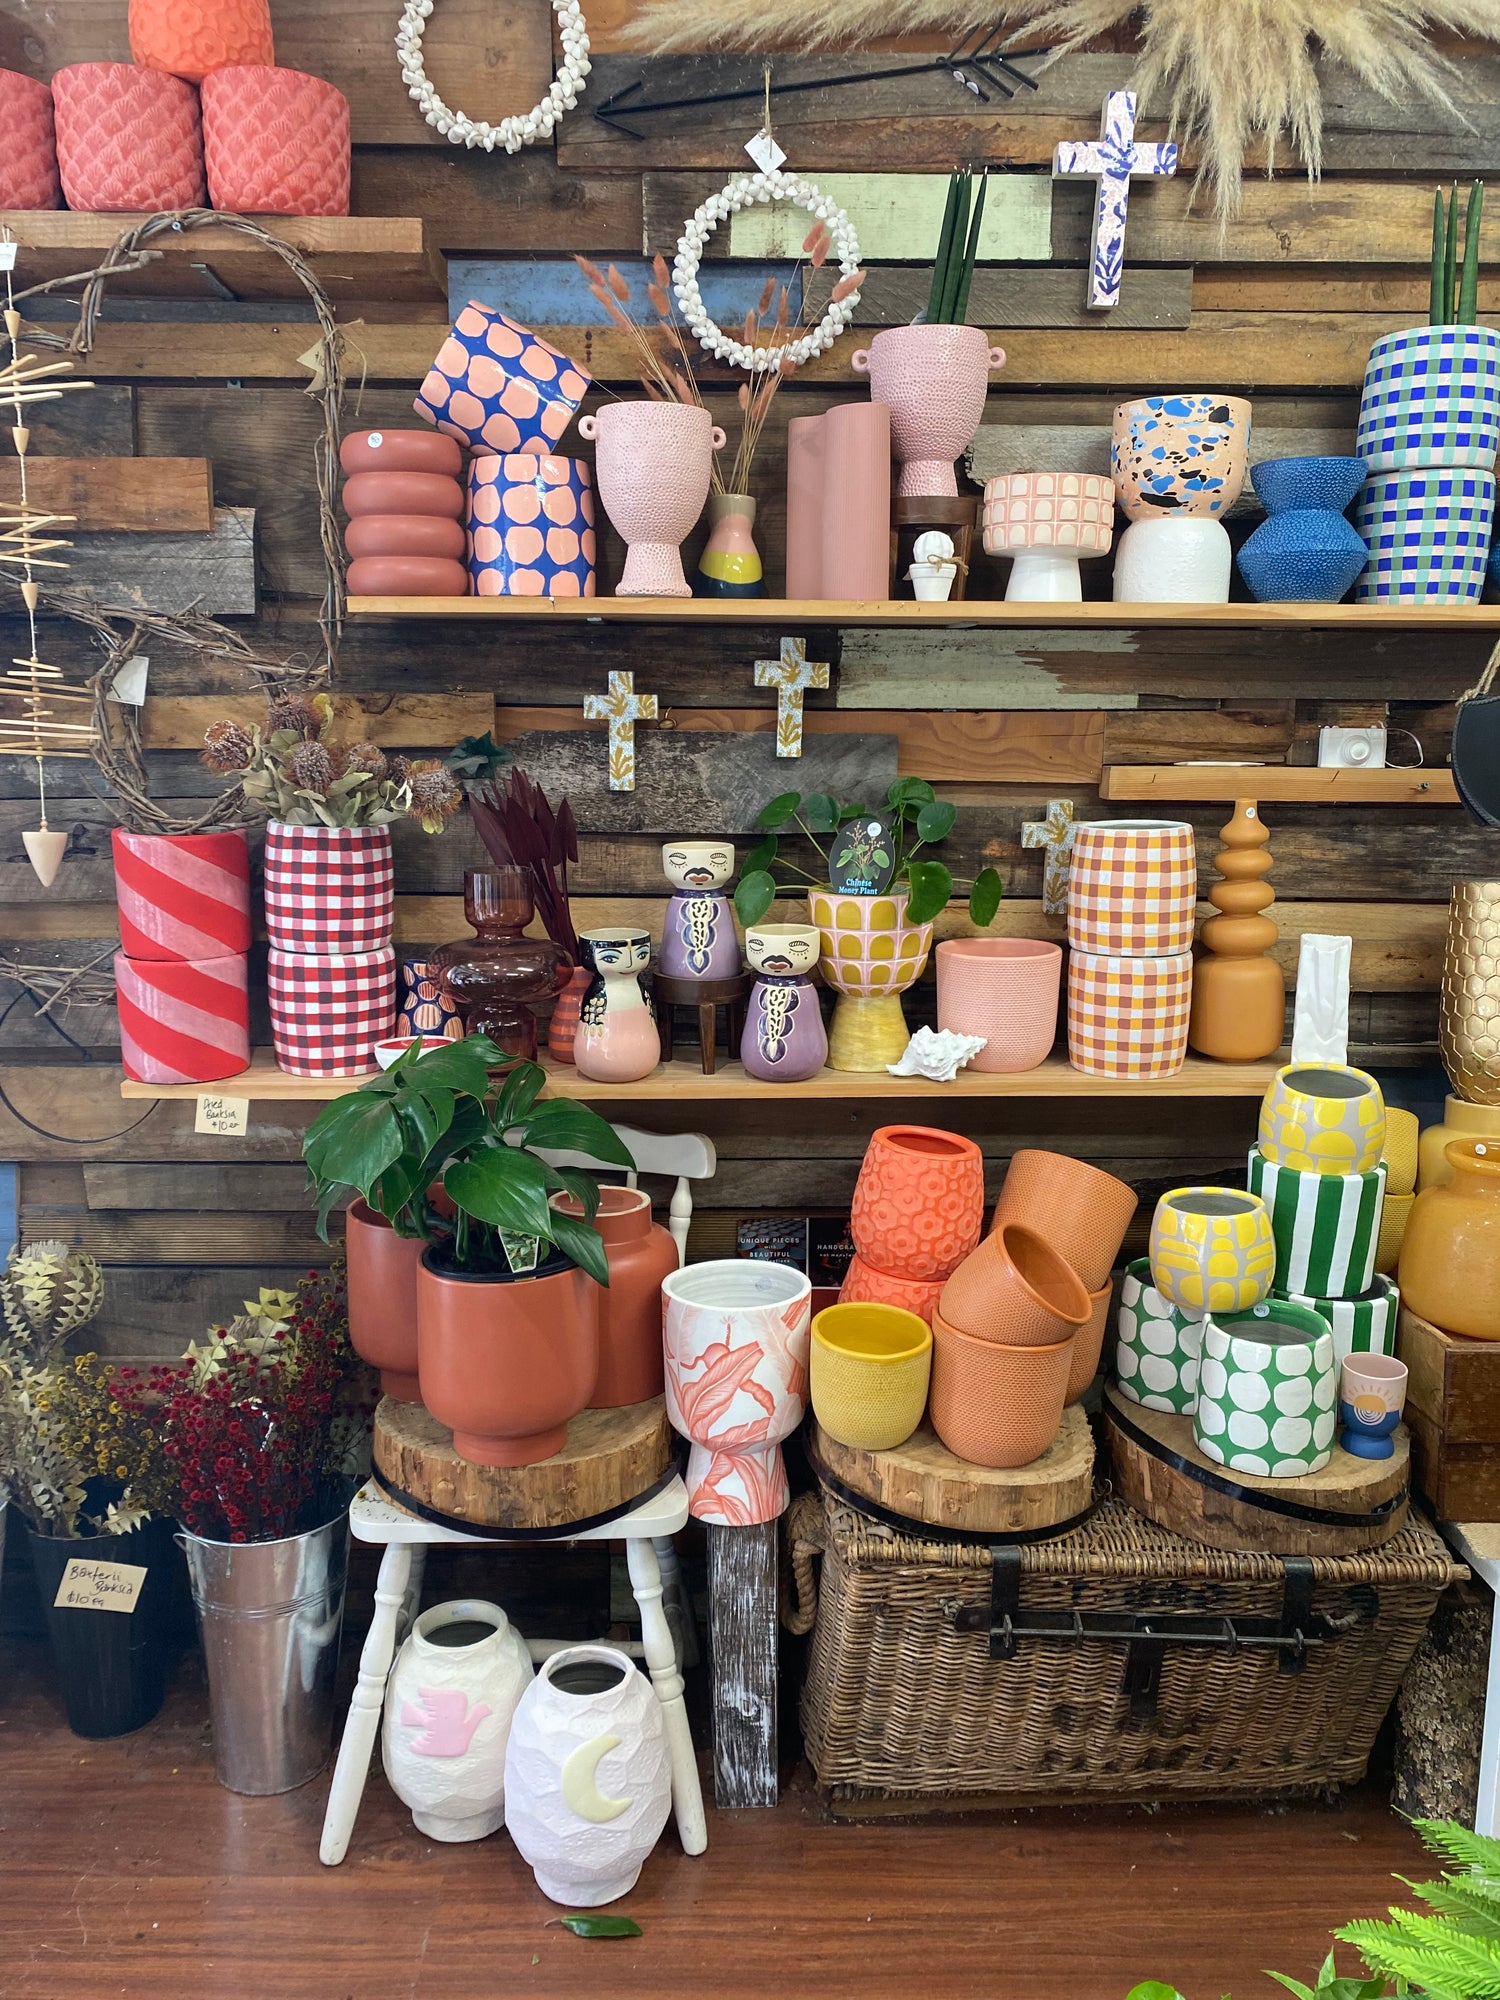 Image of store, vases, pots, plants, visual merchandise, instore view, display, pot plants, ceramic vases, ceramic post,